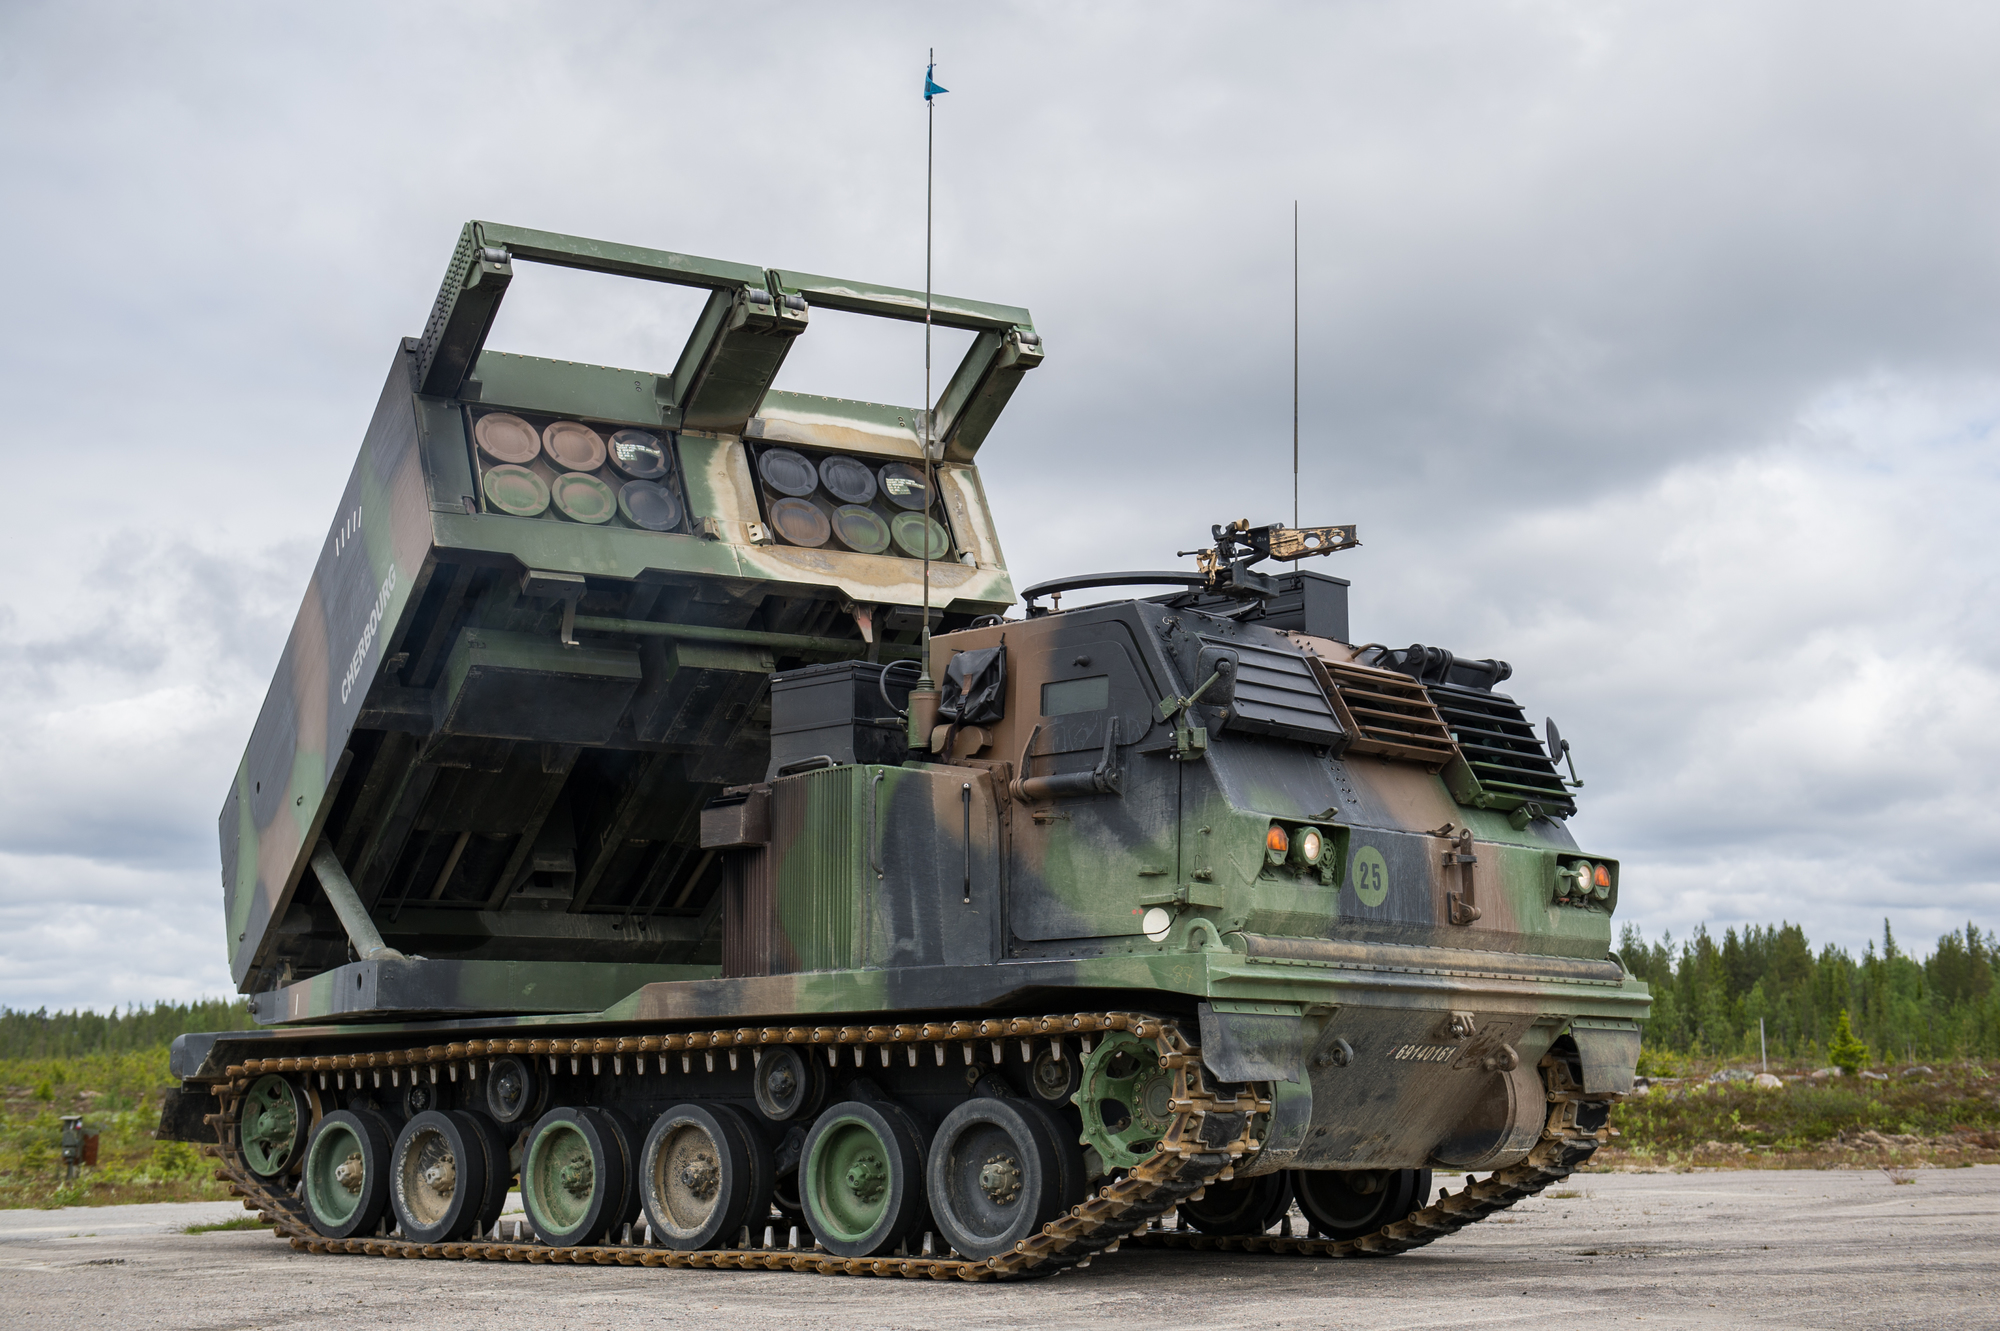 France has transferred an additional quantity of M270 LRU MLRS to Ukraine